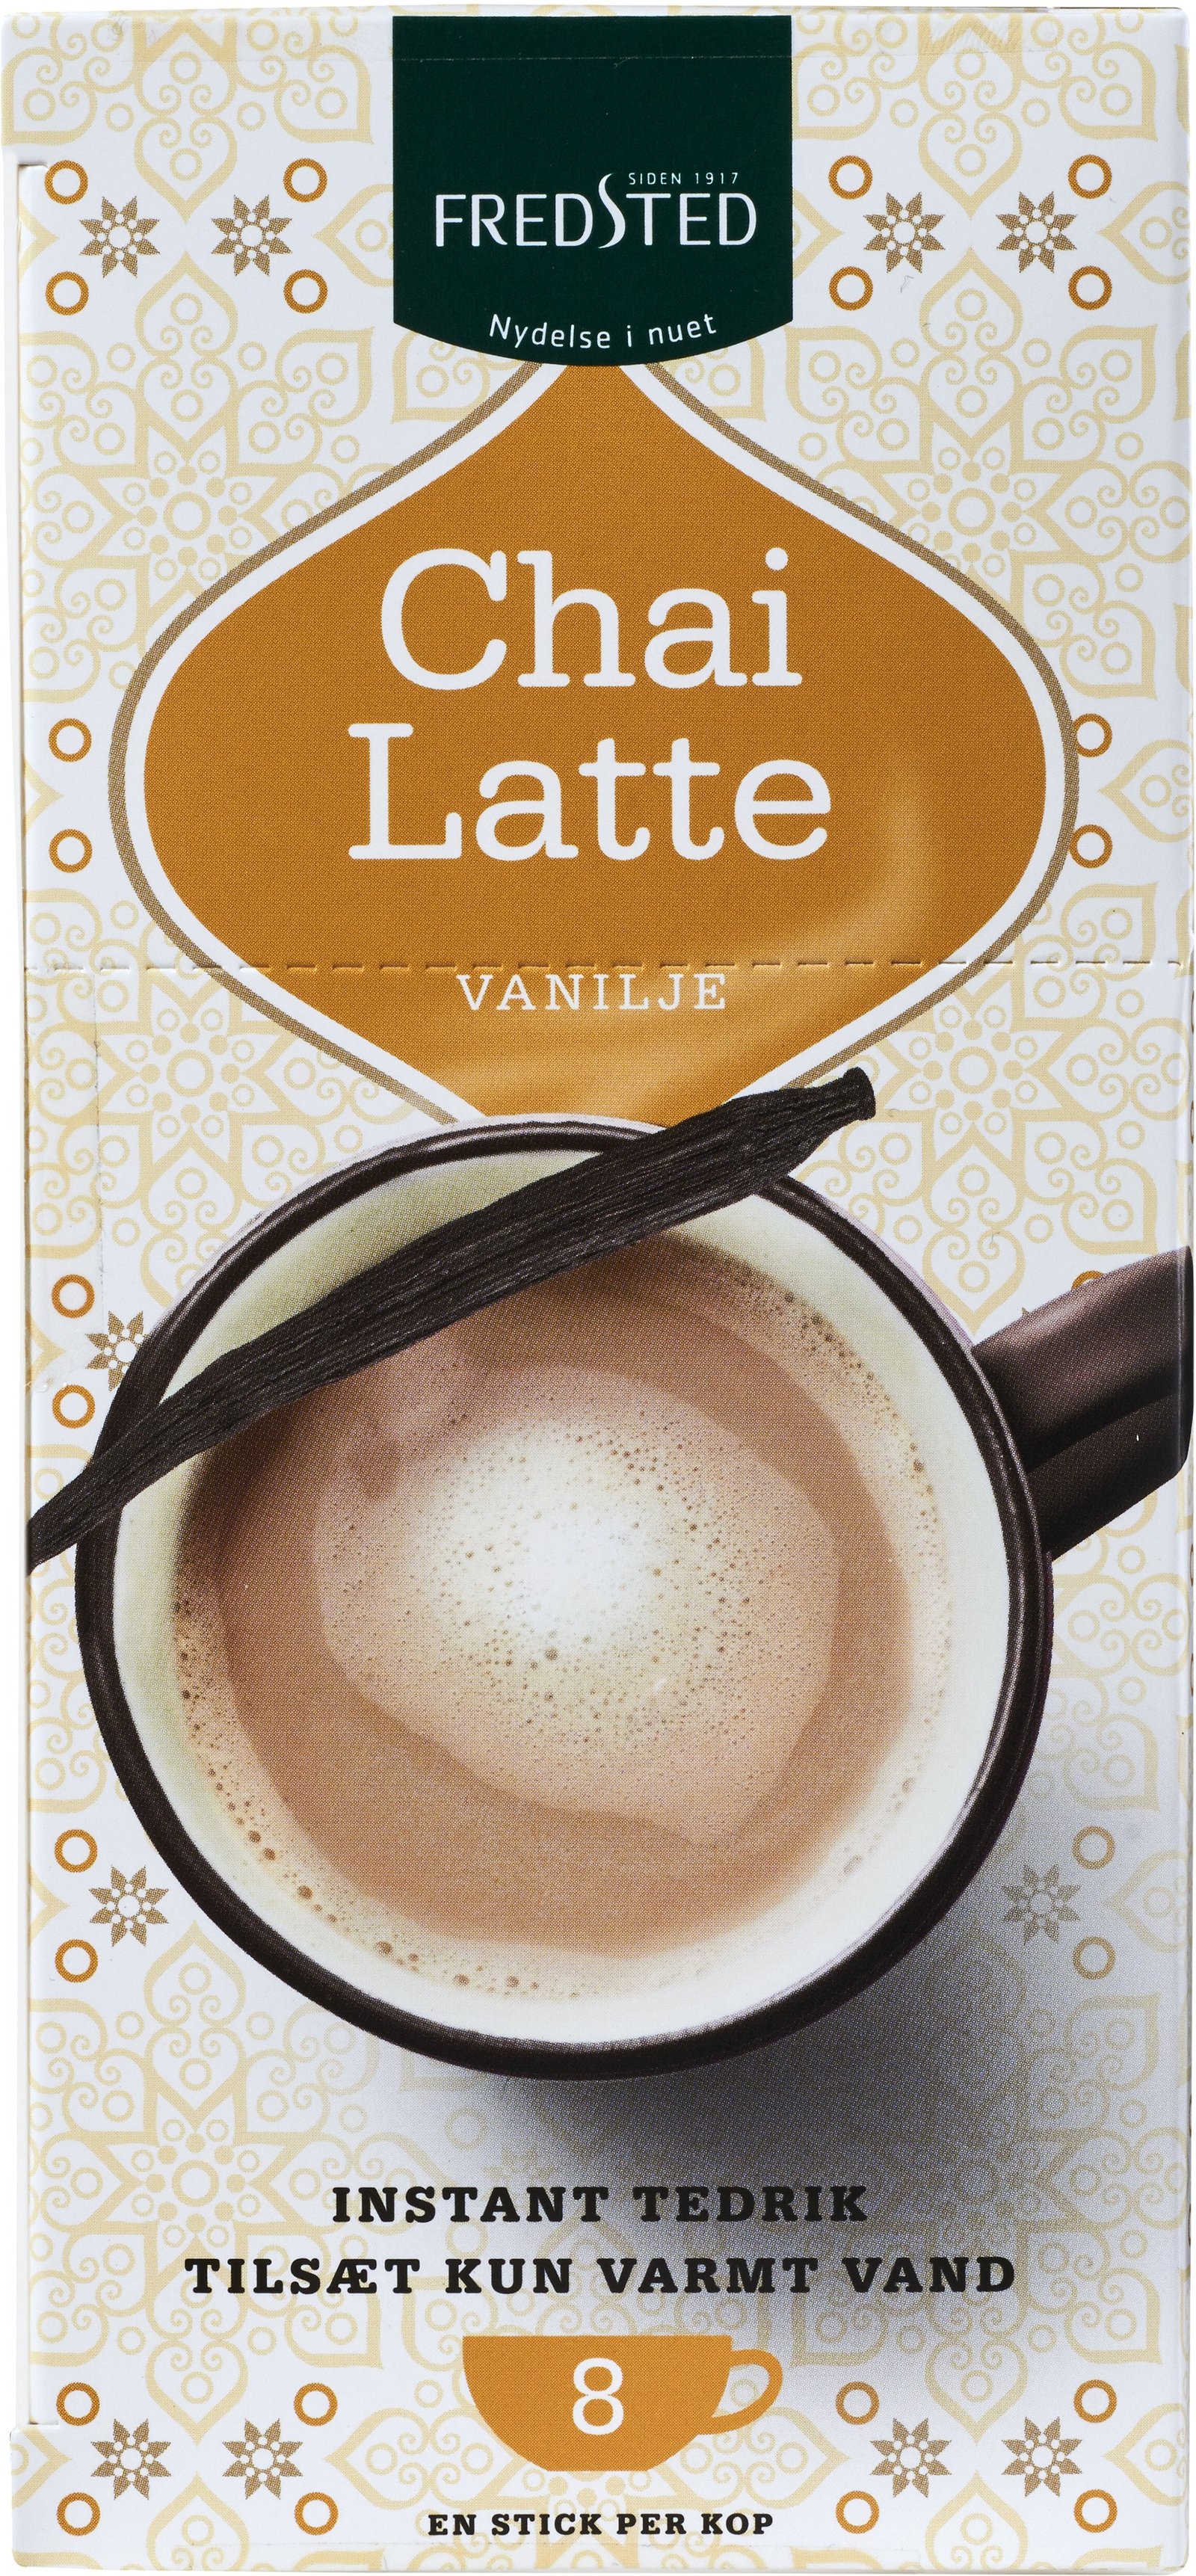 FREDSTED Chai Latte Vanilj 8 st